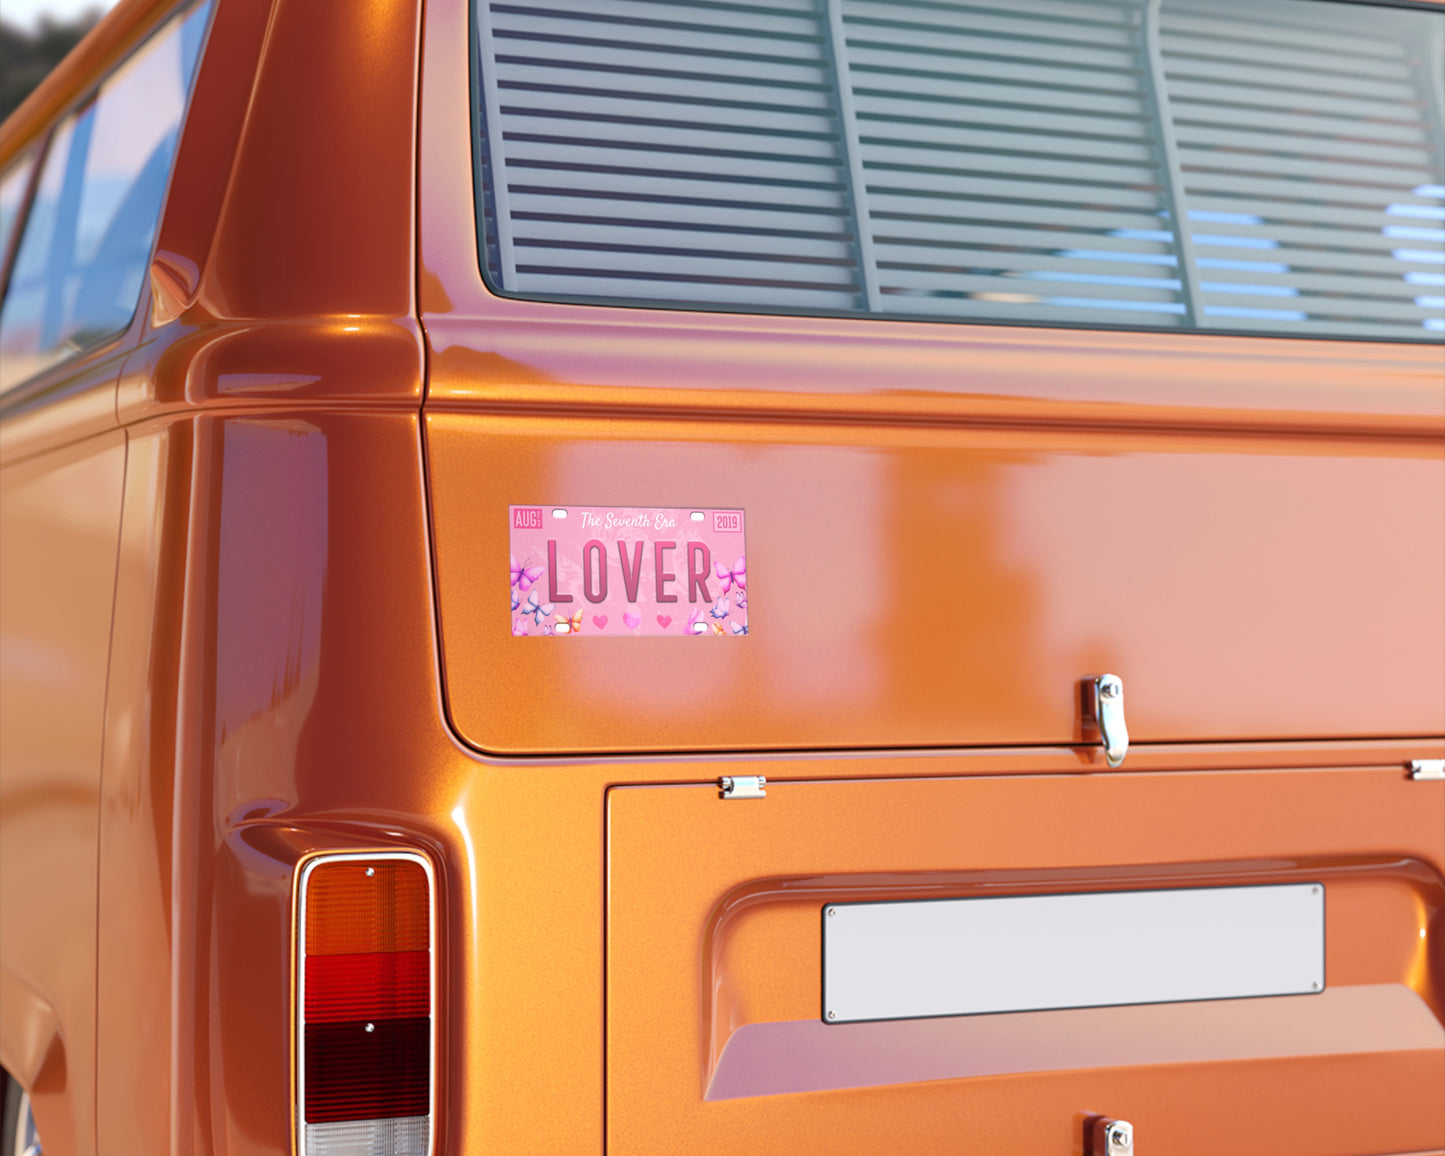 Lover era bumper sticker